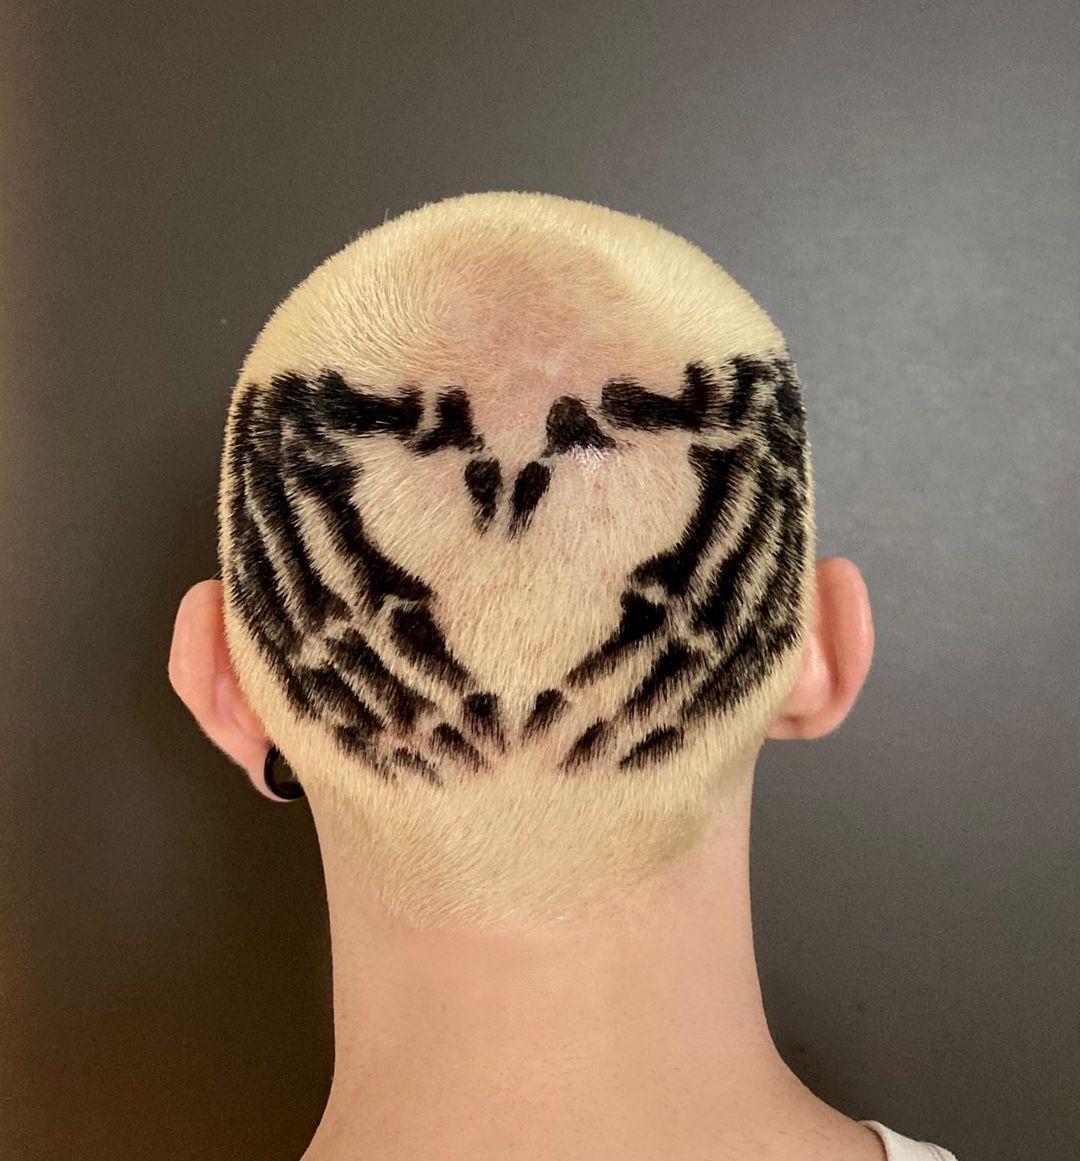 buzz cut with skull hair tattoo